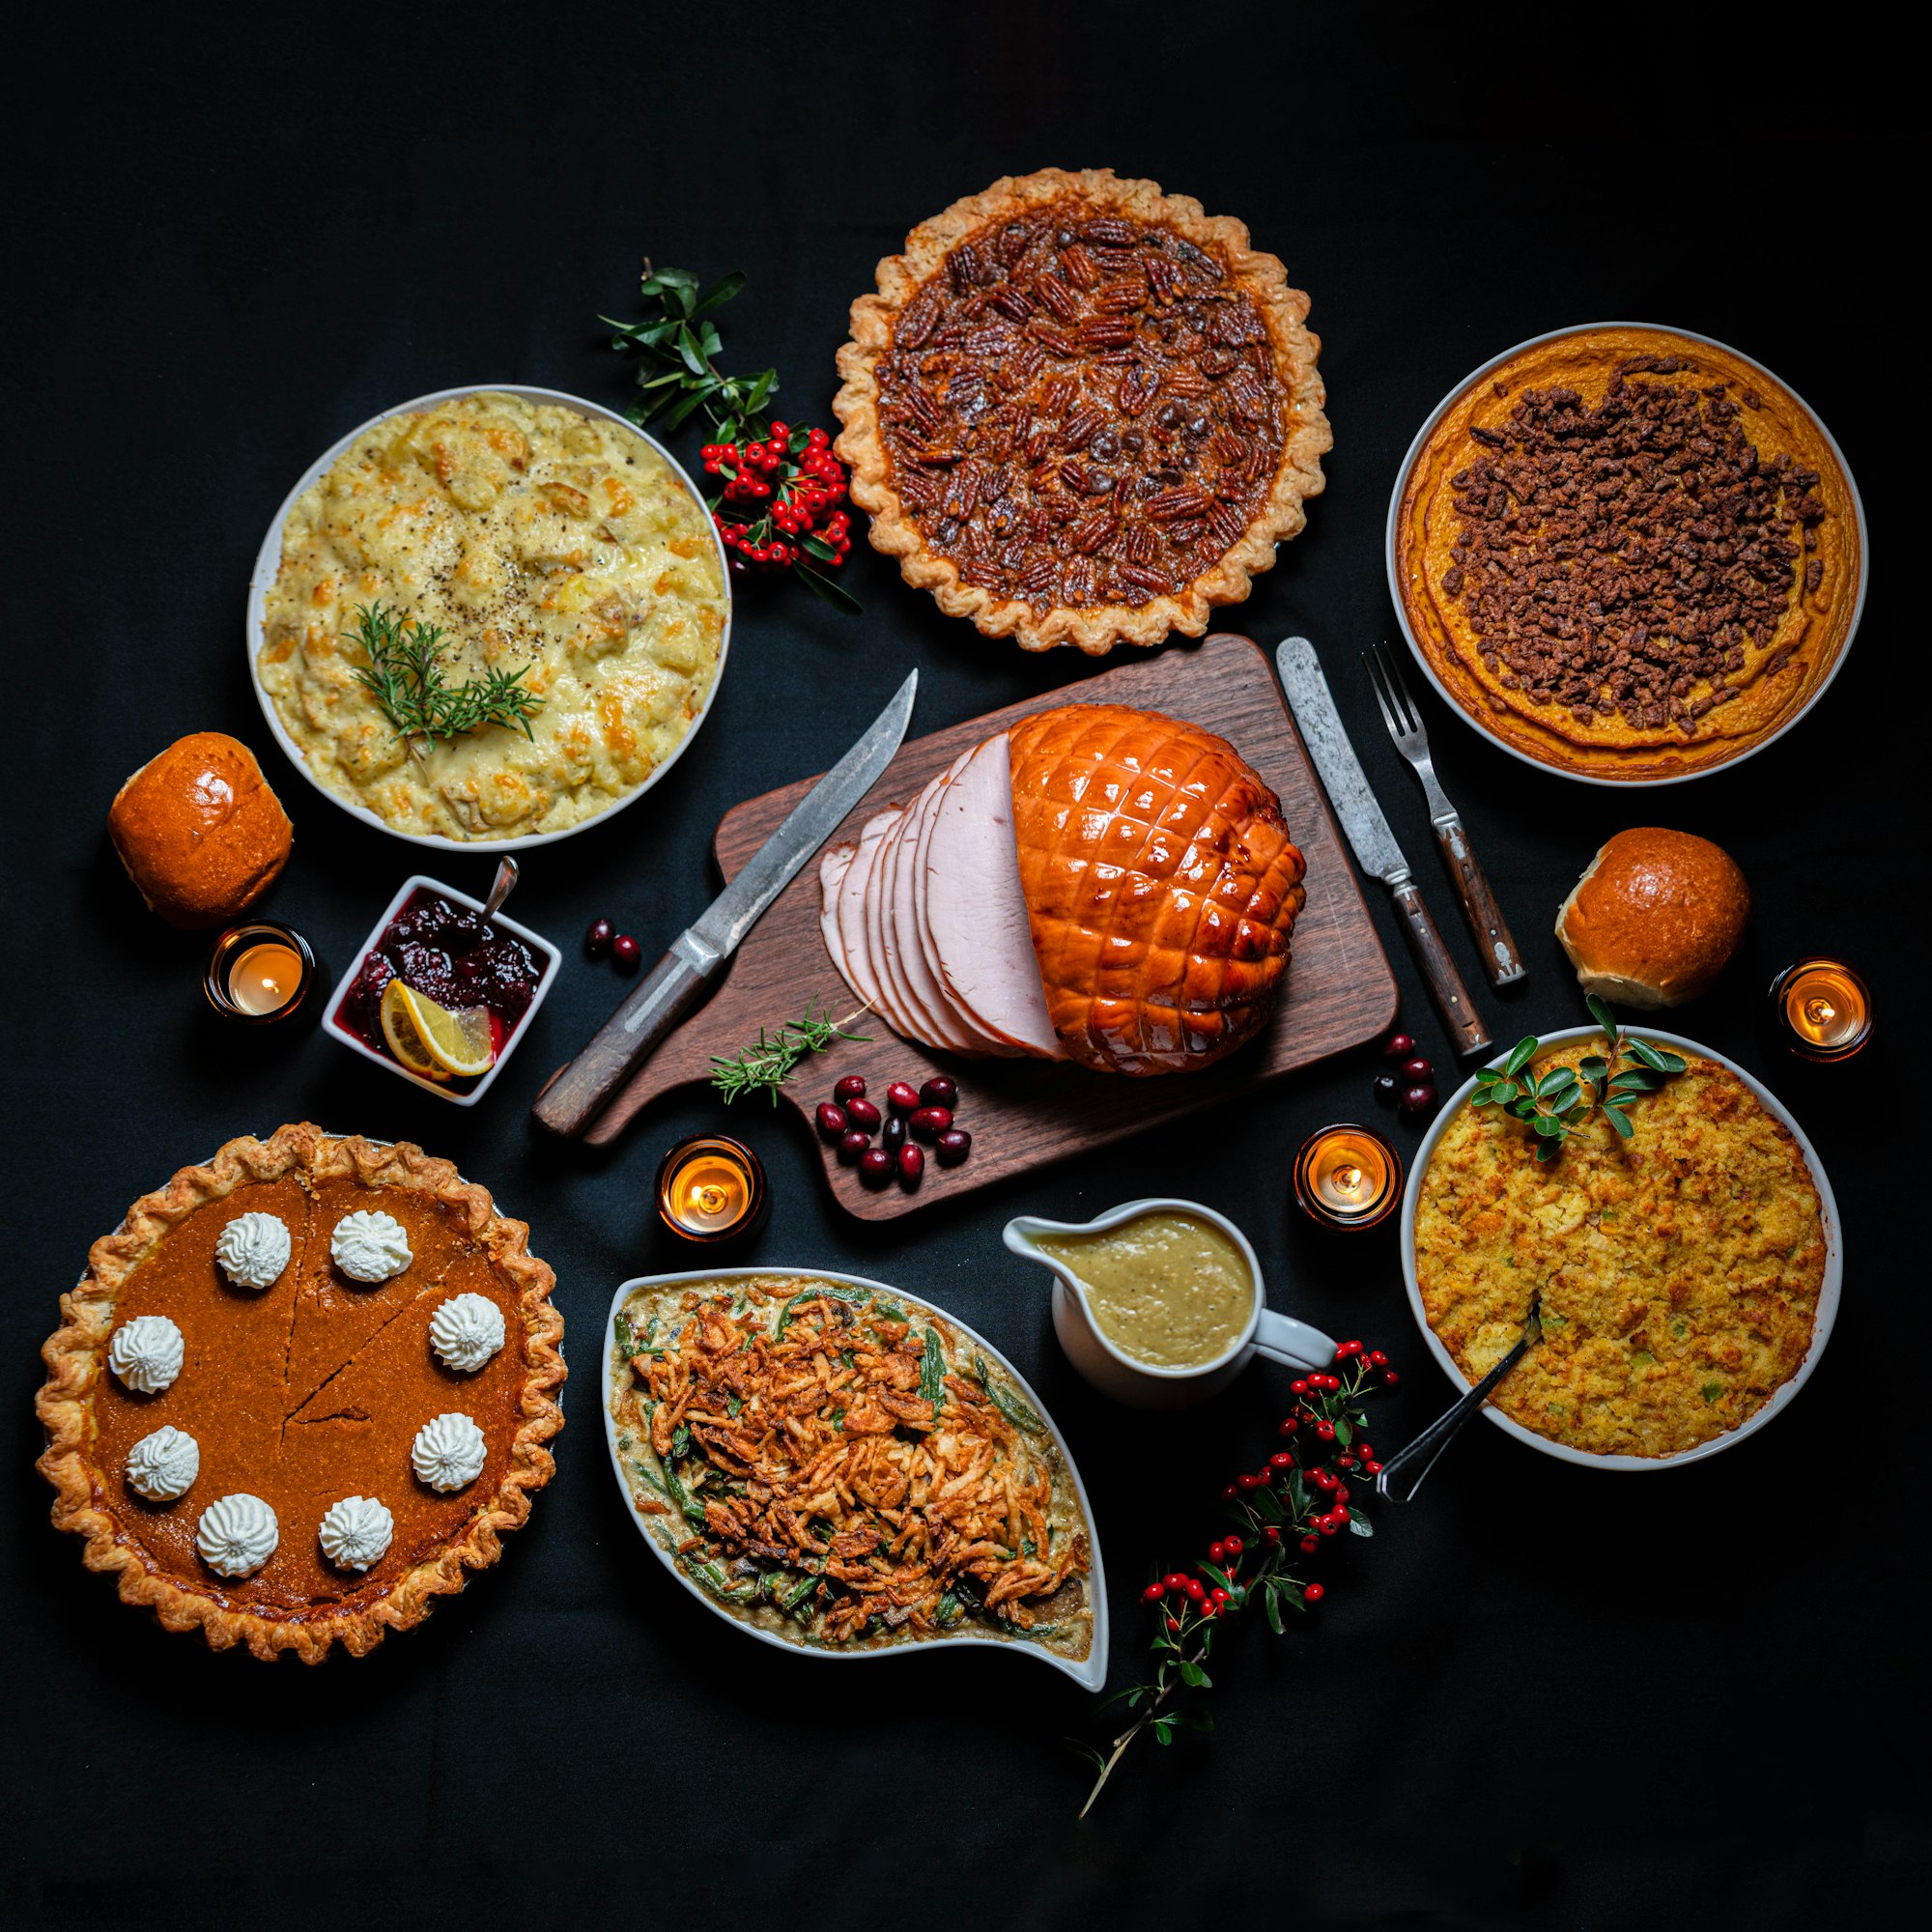 Thanksgiving Day Food Box Sign-ups